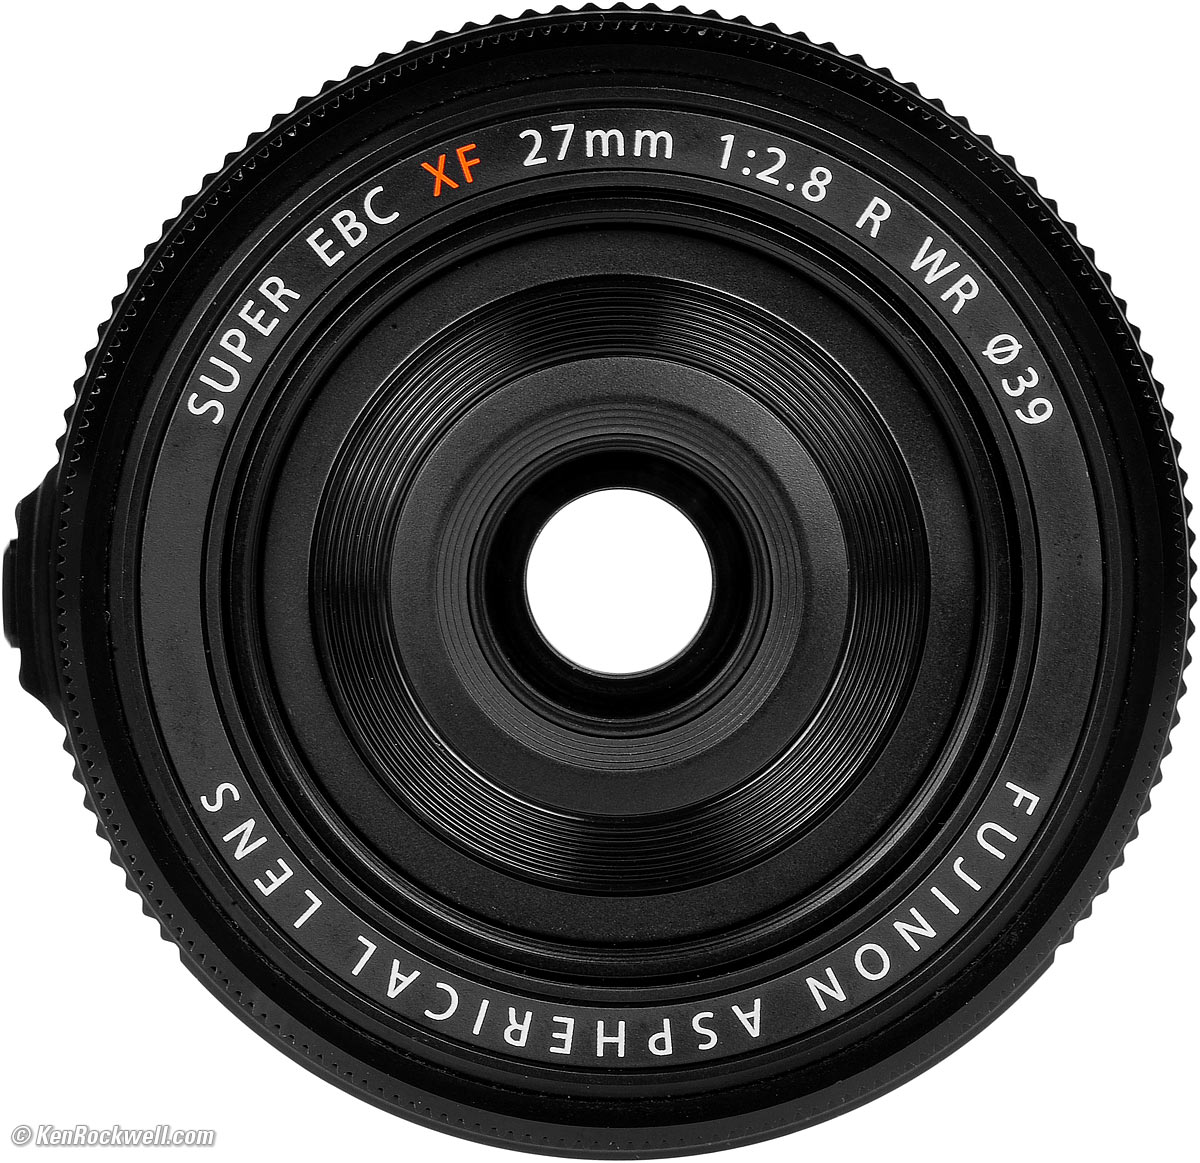 Fuji XF 27mm f/2.8 R WR Review